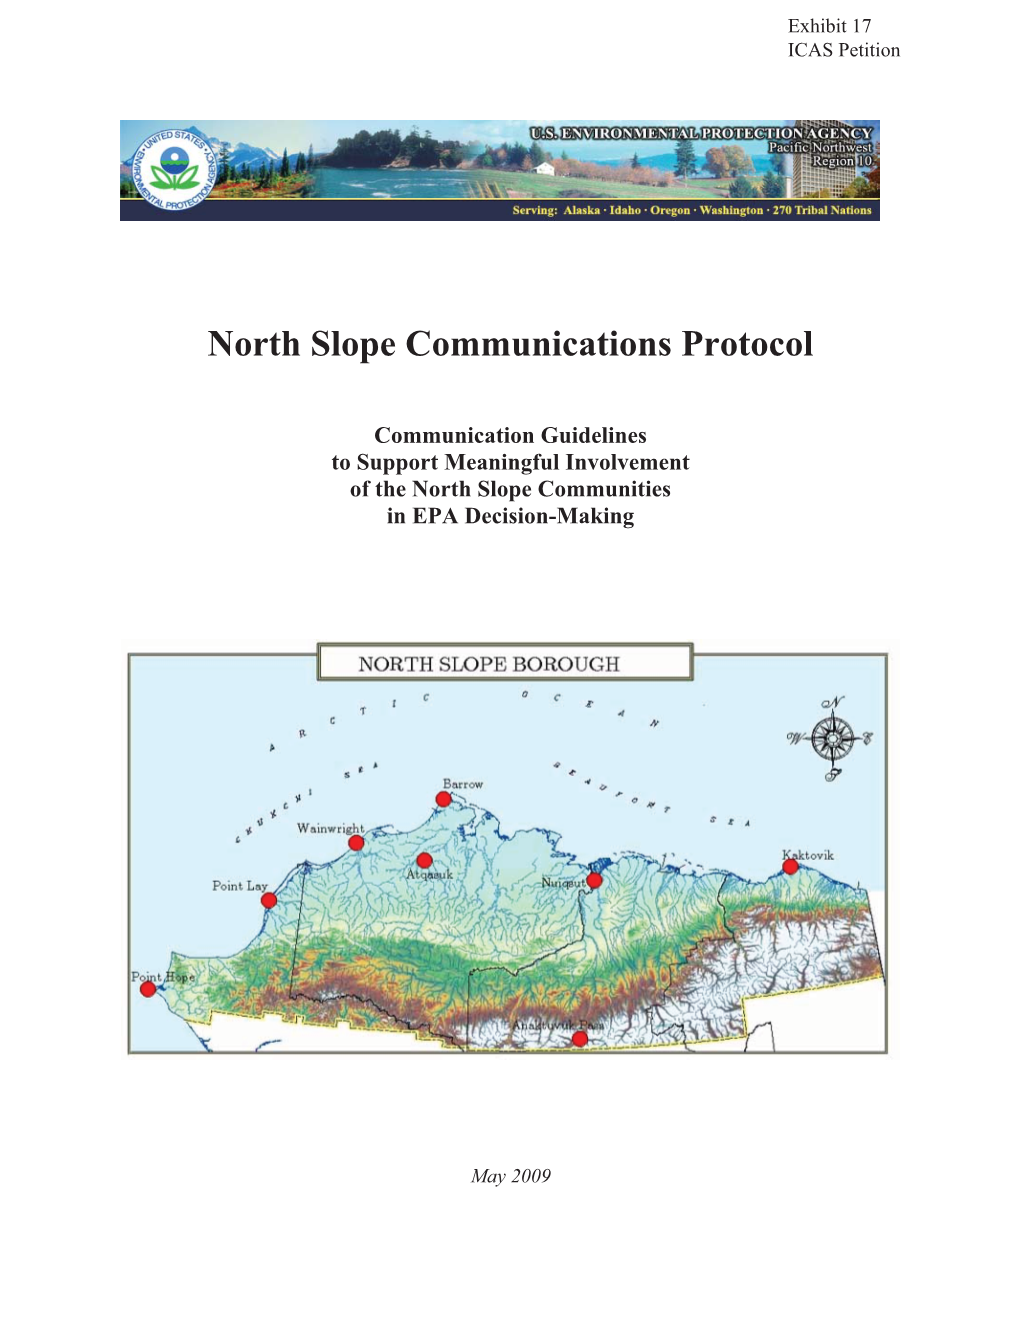 North Slope Communications Protocol